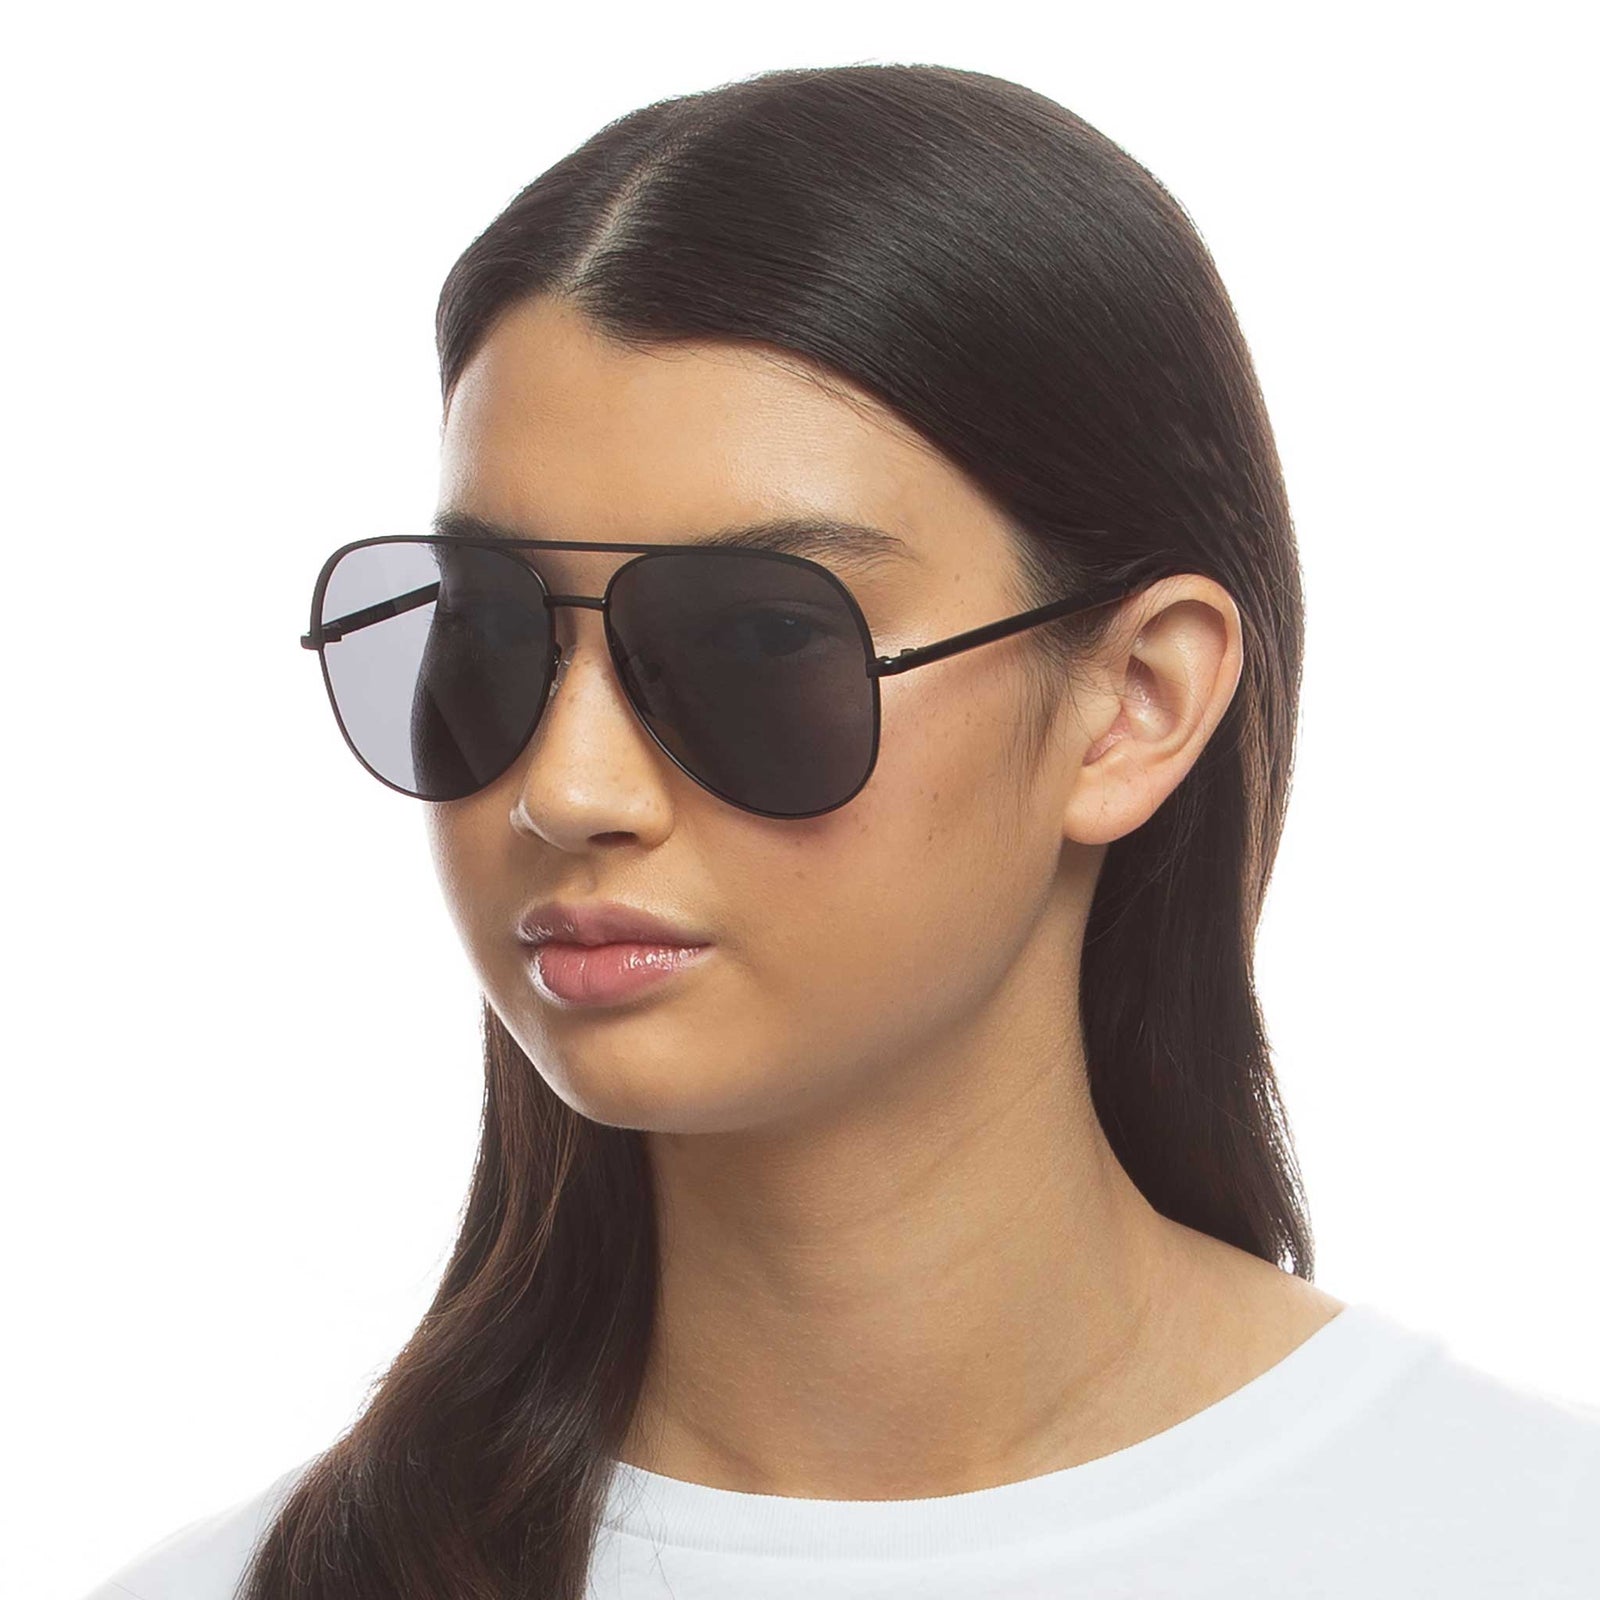 17 Aviator Sunglasses for Blocking Rays on Sunny Days | Fashion |  Editorialist